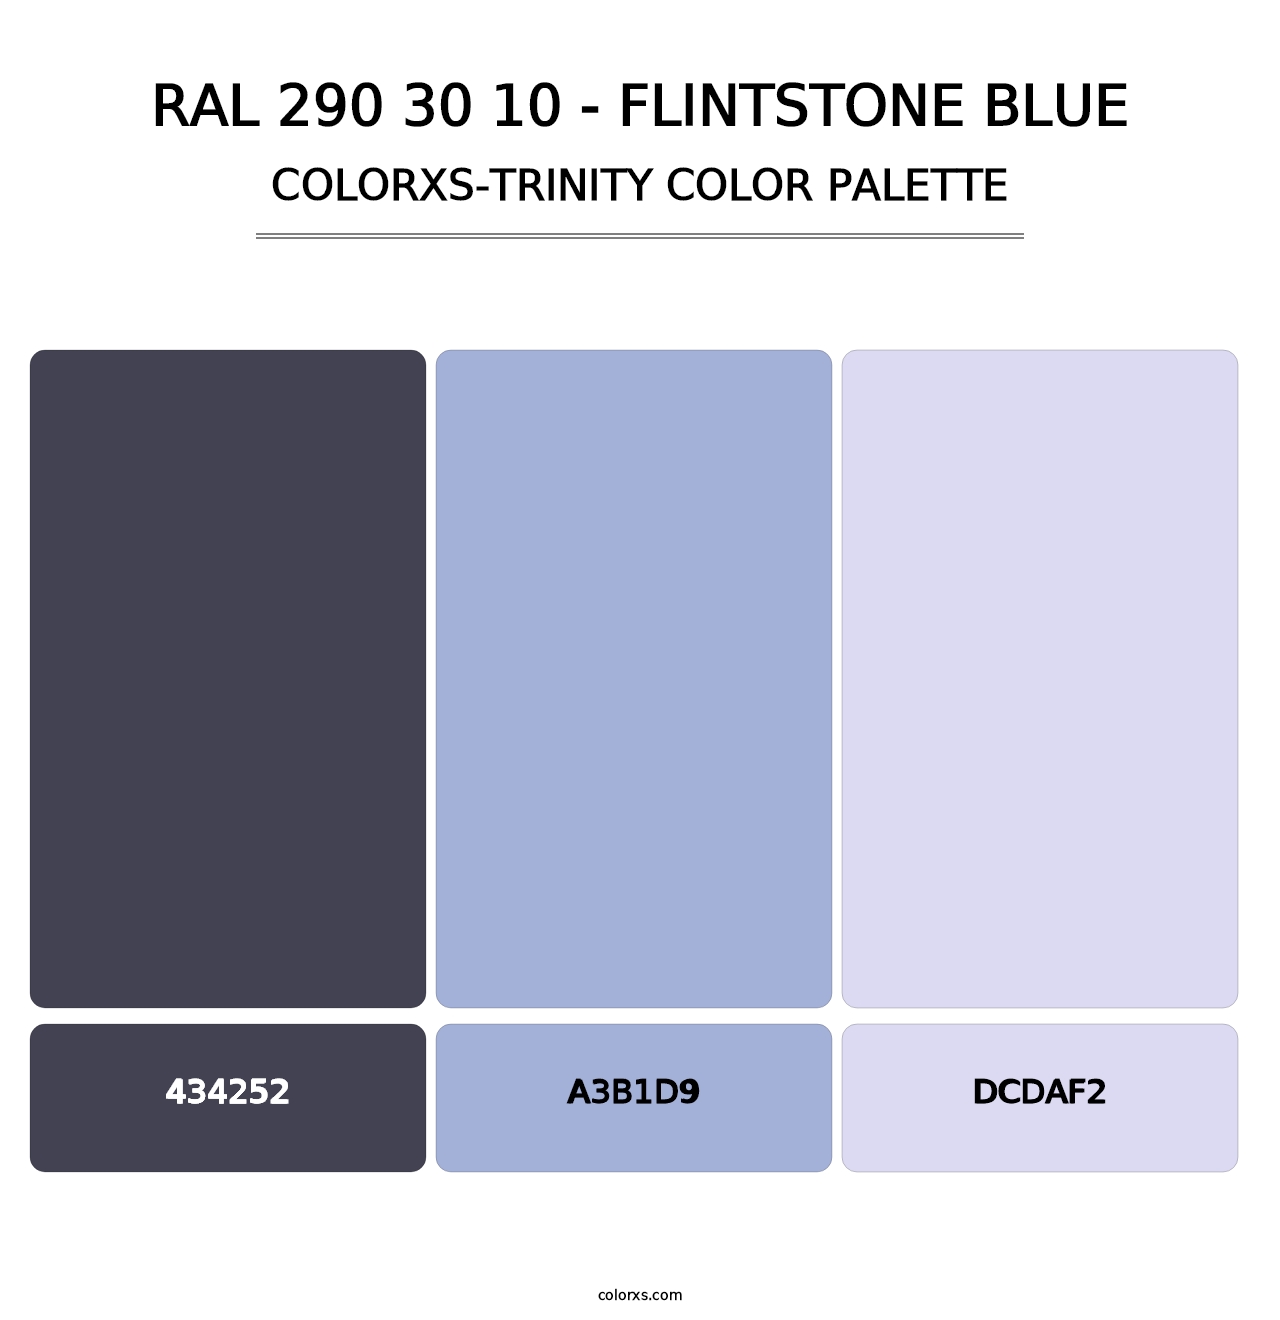 RAL 290 30 10 - Flintstone Blue - Colorxs Trinity Palette